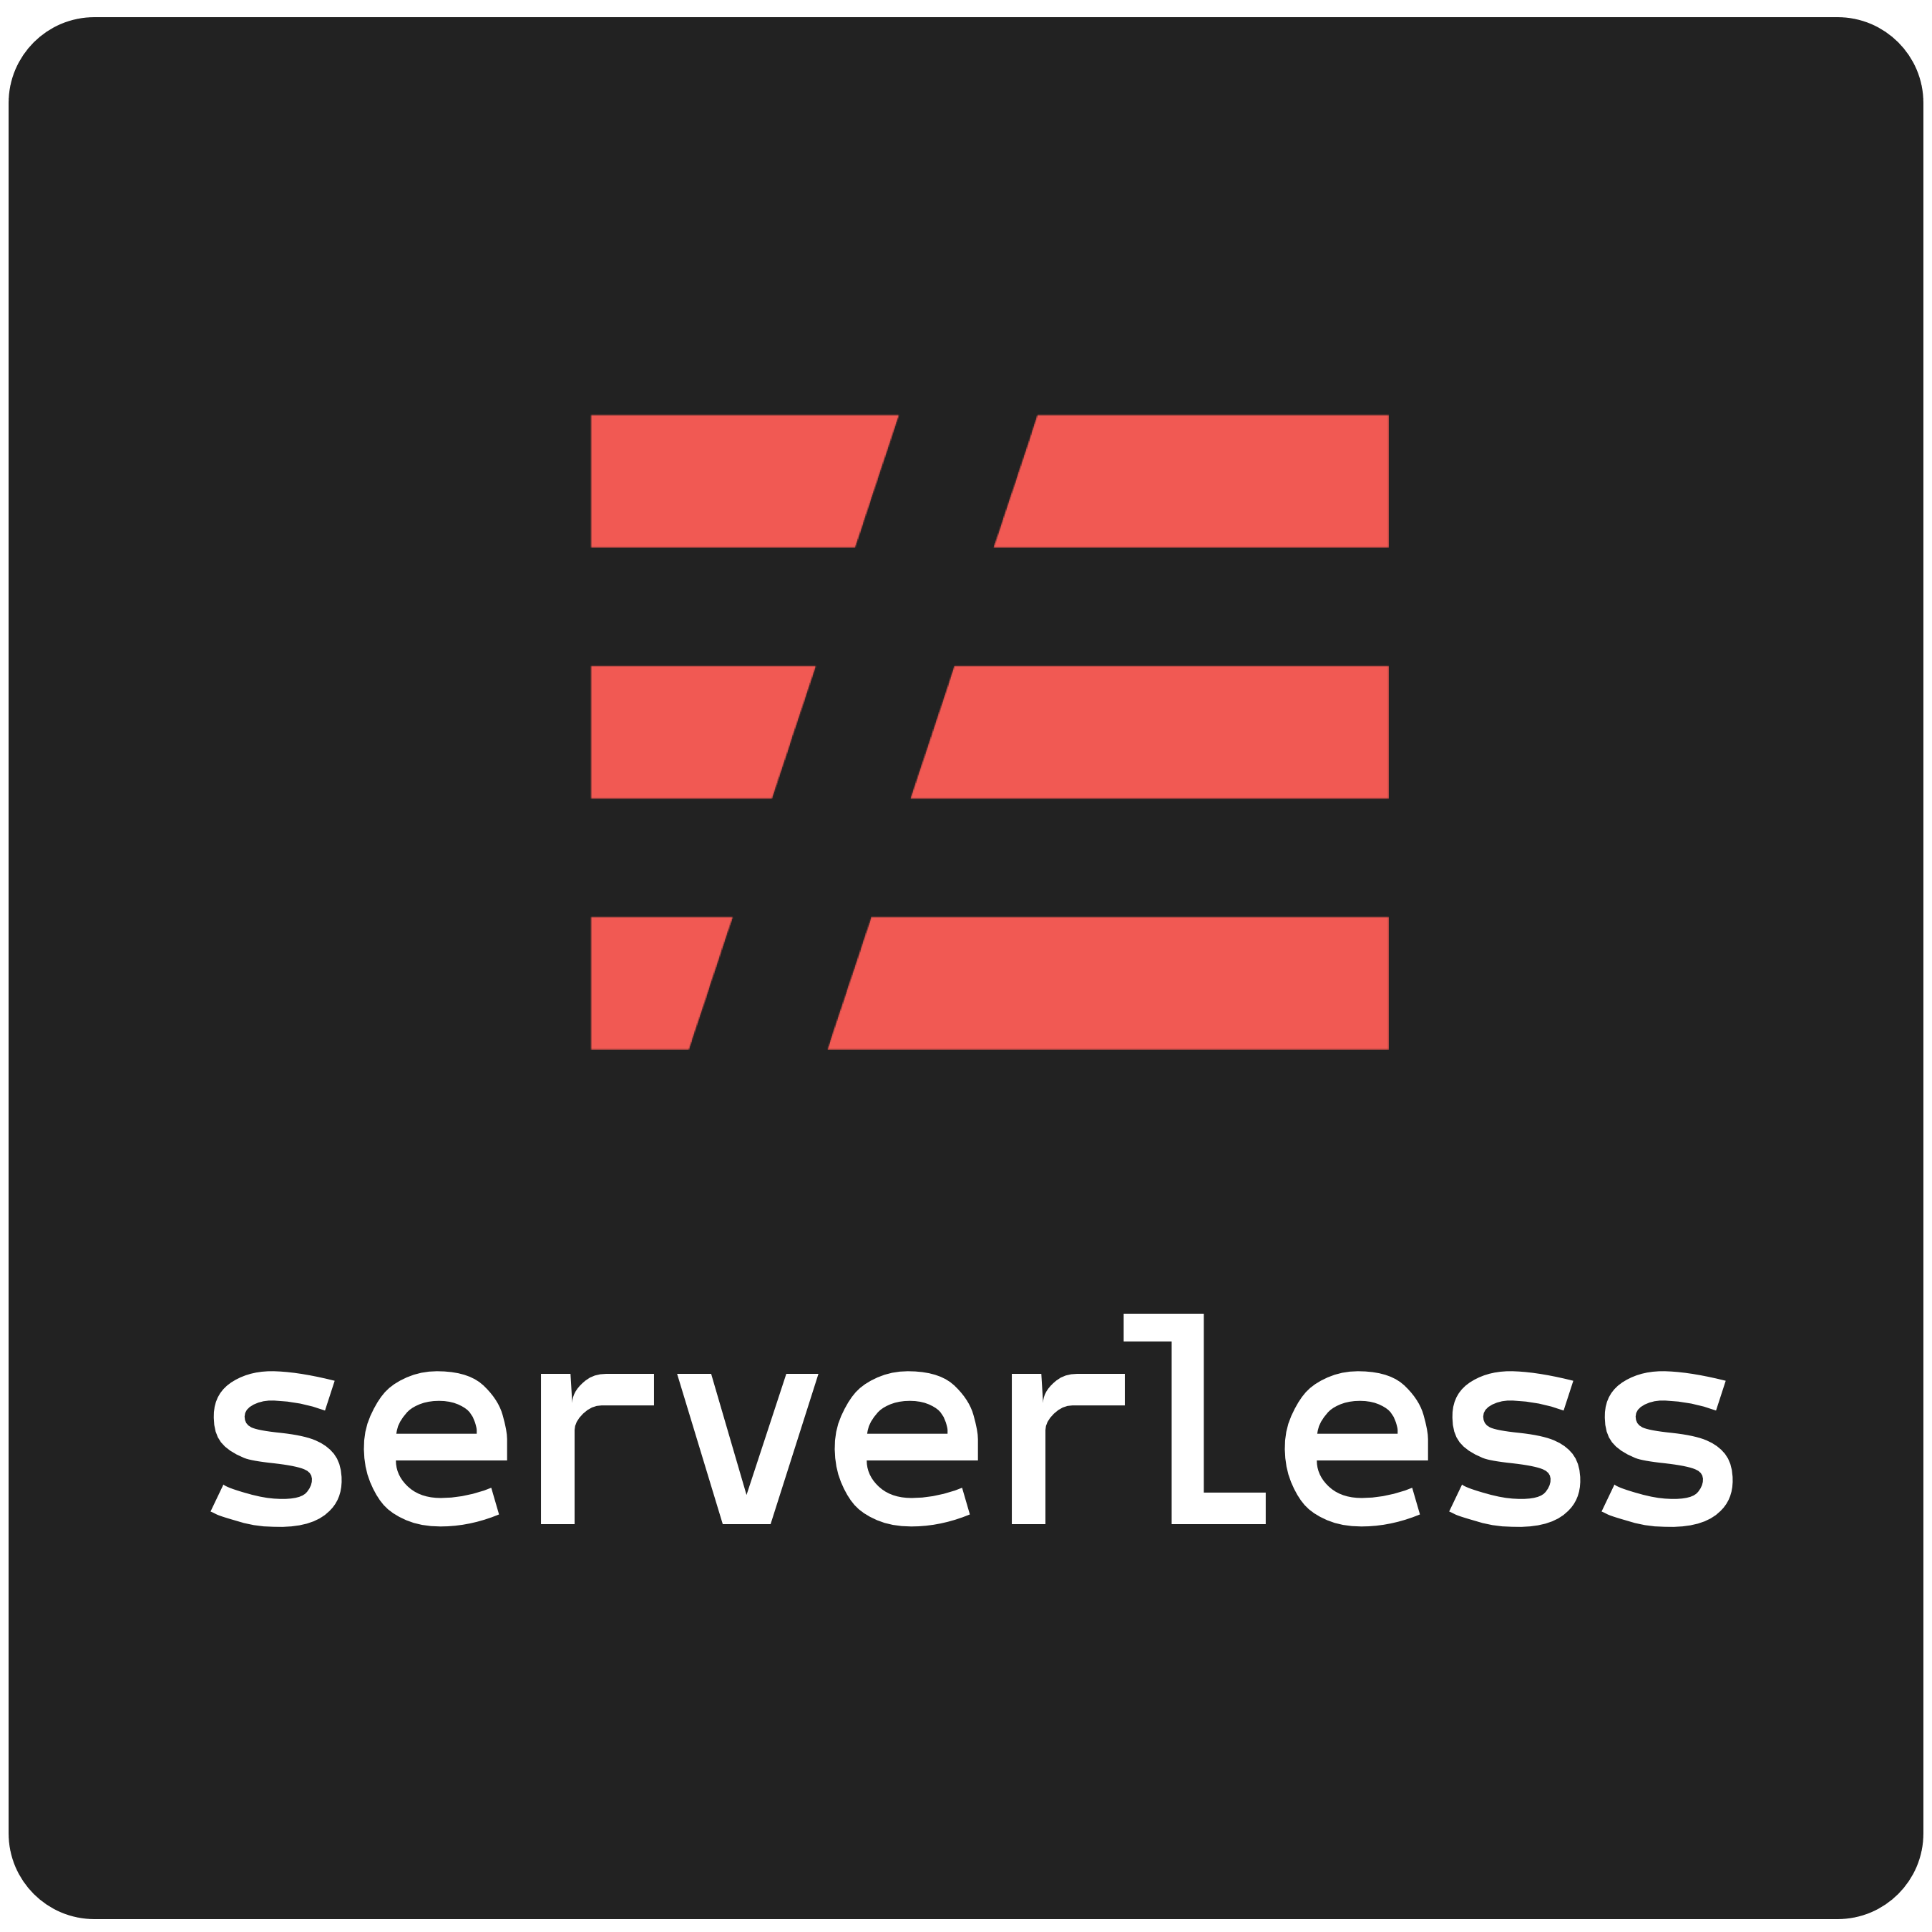 Running Serverless Framework Functions Locally